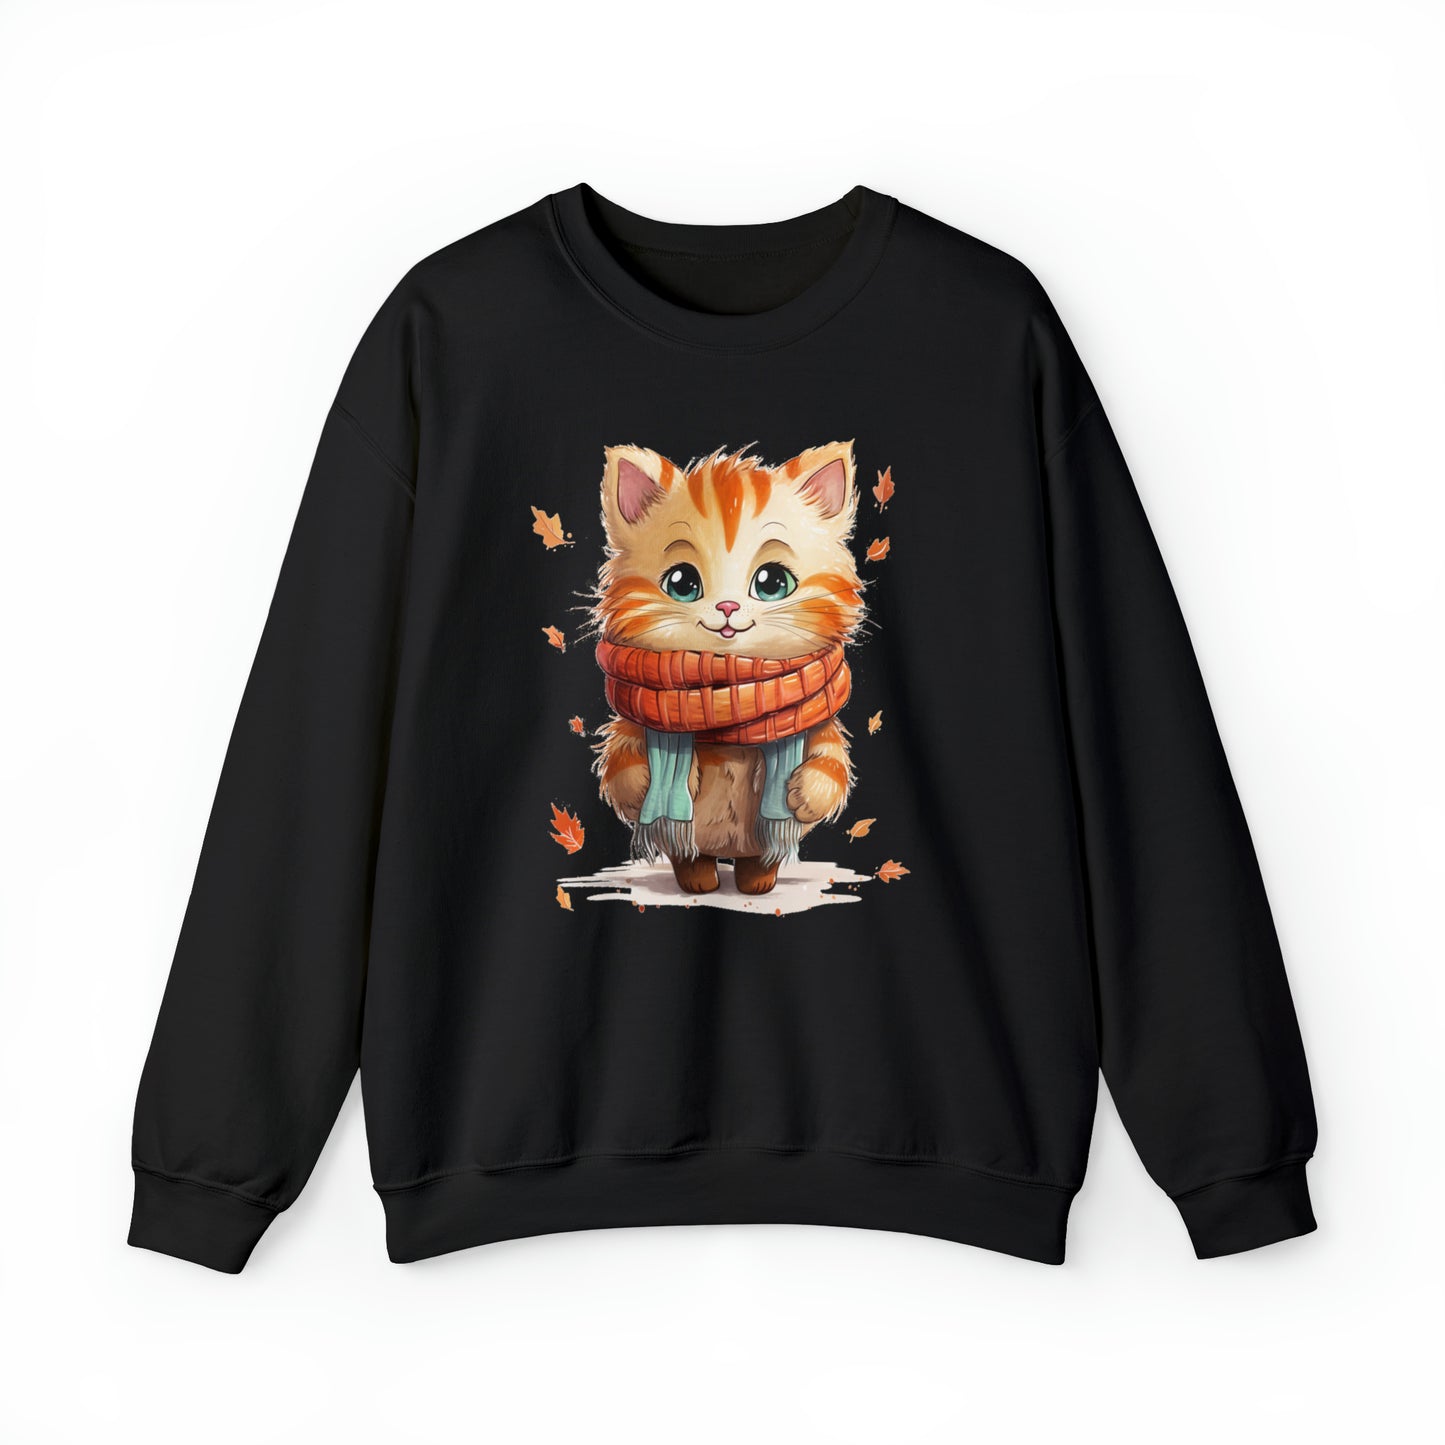 Cat Scarf Sweatshirt, Kitten Fall Autumn Leaves Graphic Crewneck Fleece Cotton Sweater Jumper Pullover Men Women Adult Aesthetic Top Starcove Fashion